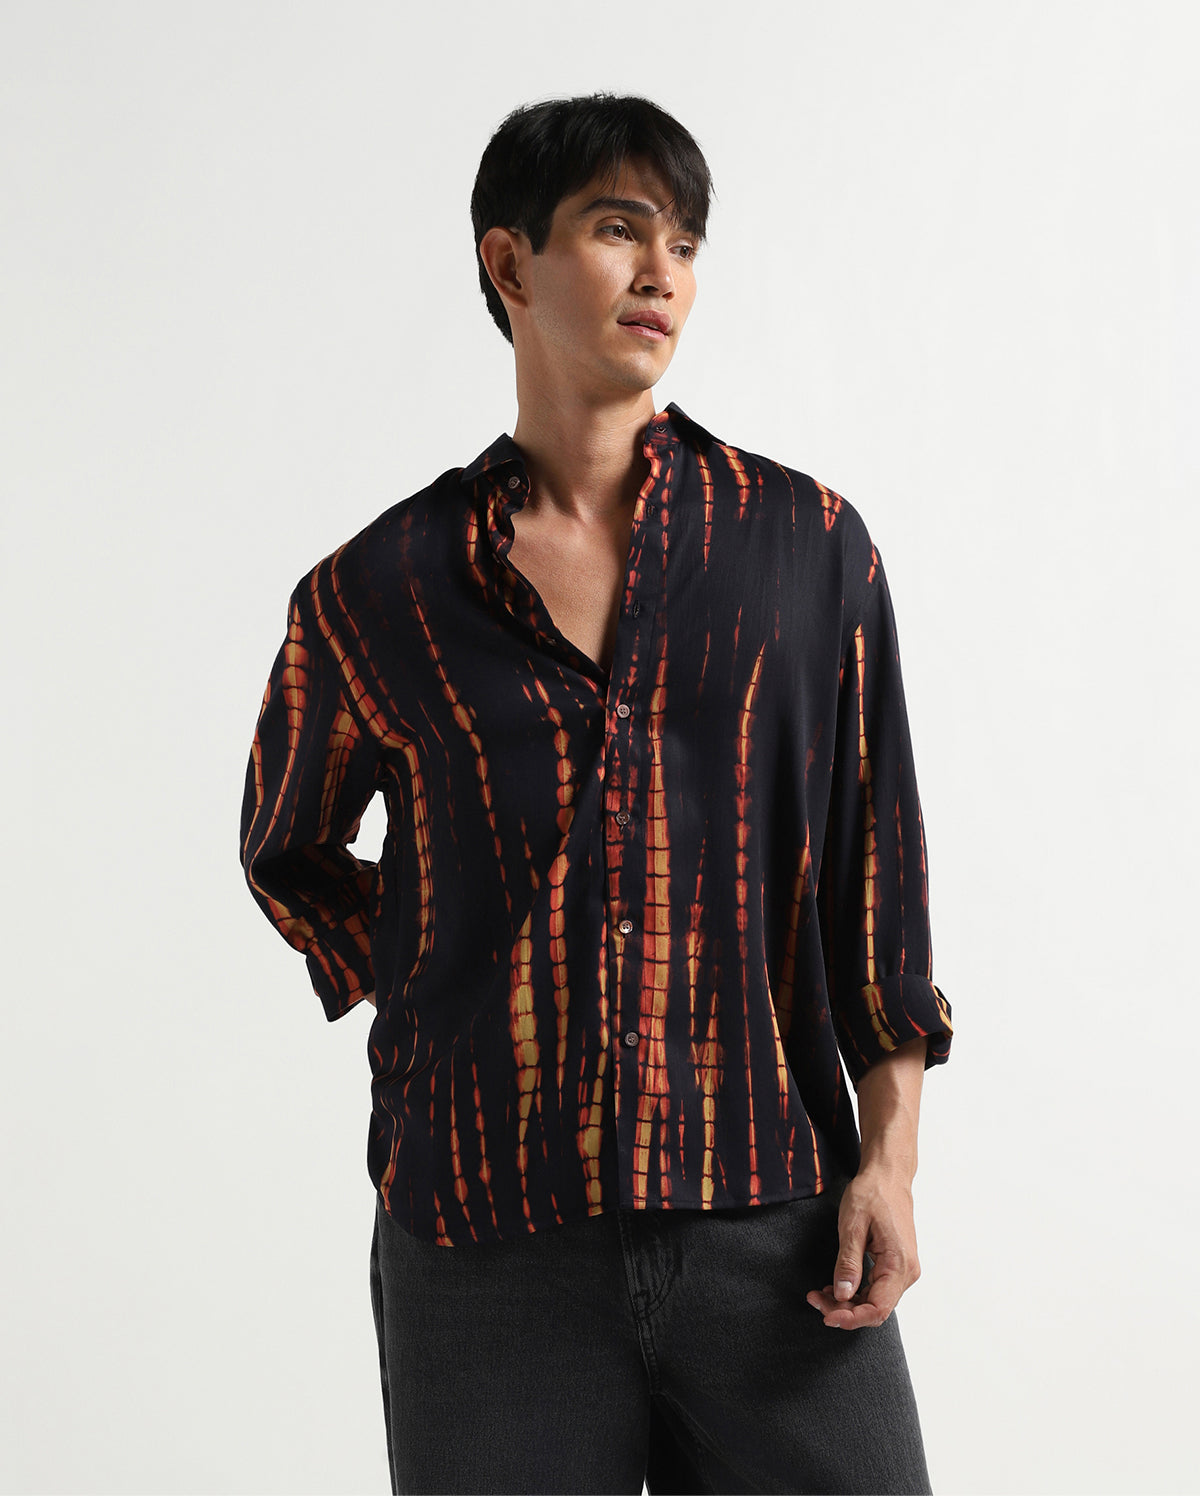 The Fire Shirt: Japanese Shibori Tye Dye Drop Shoulder Shirt